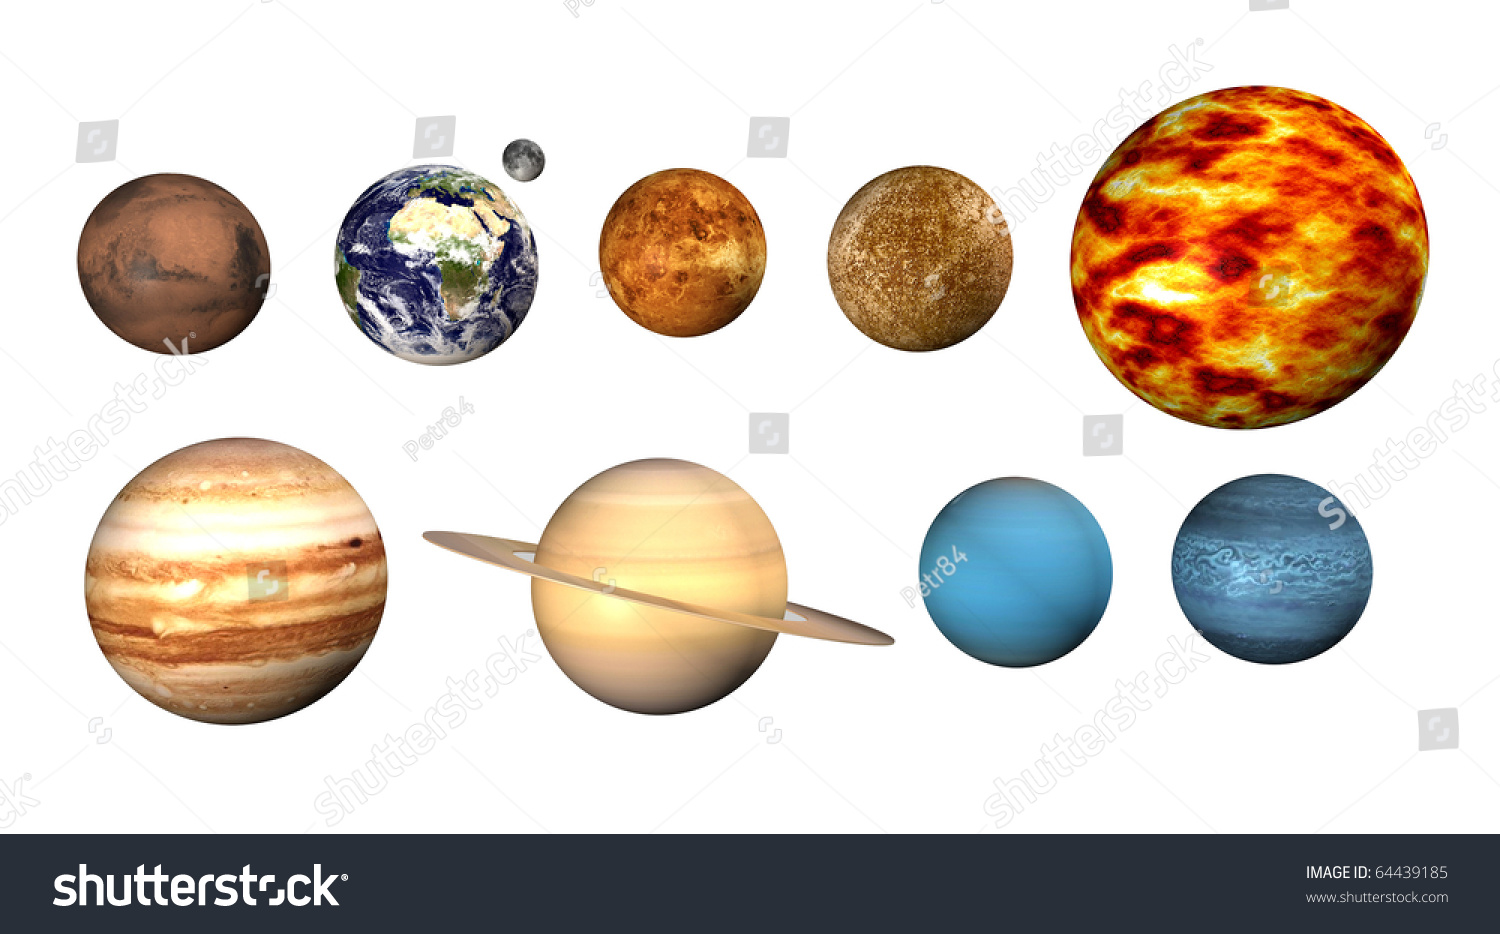 Planets On White Background Stock Illustration 64439185 - Shutterstock